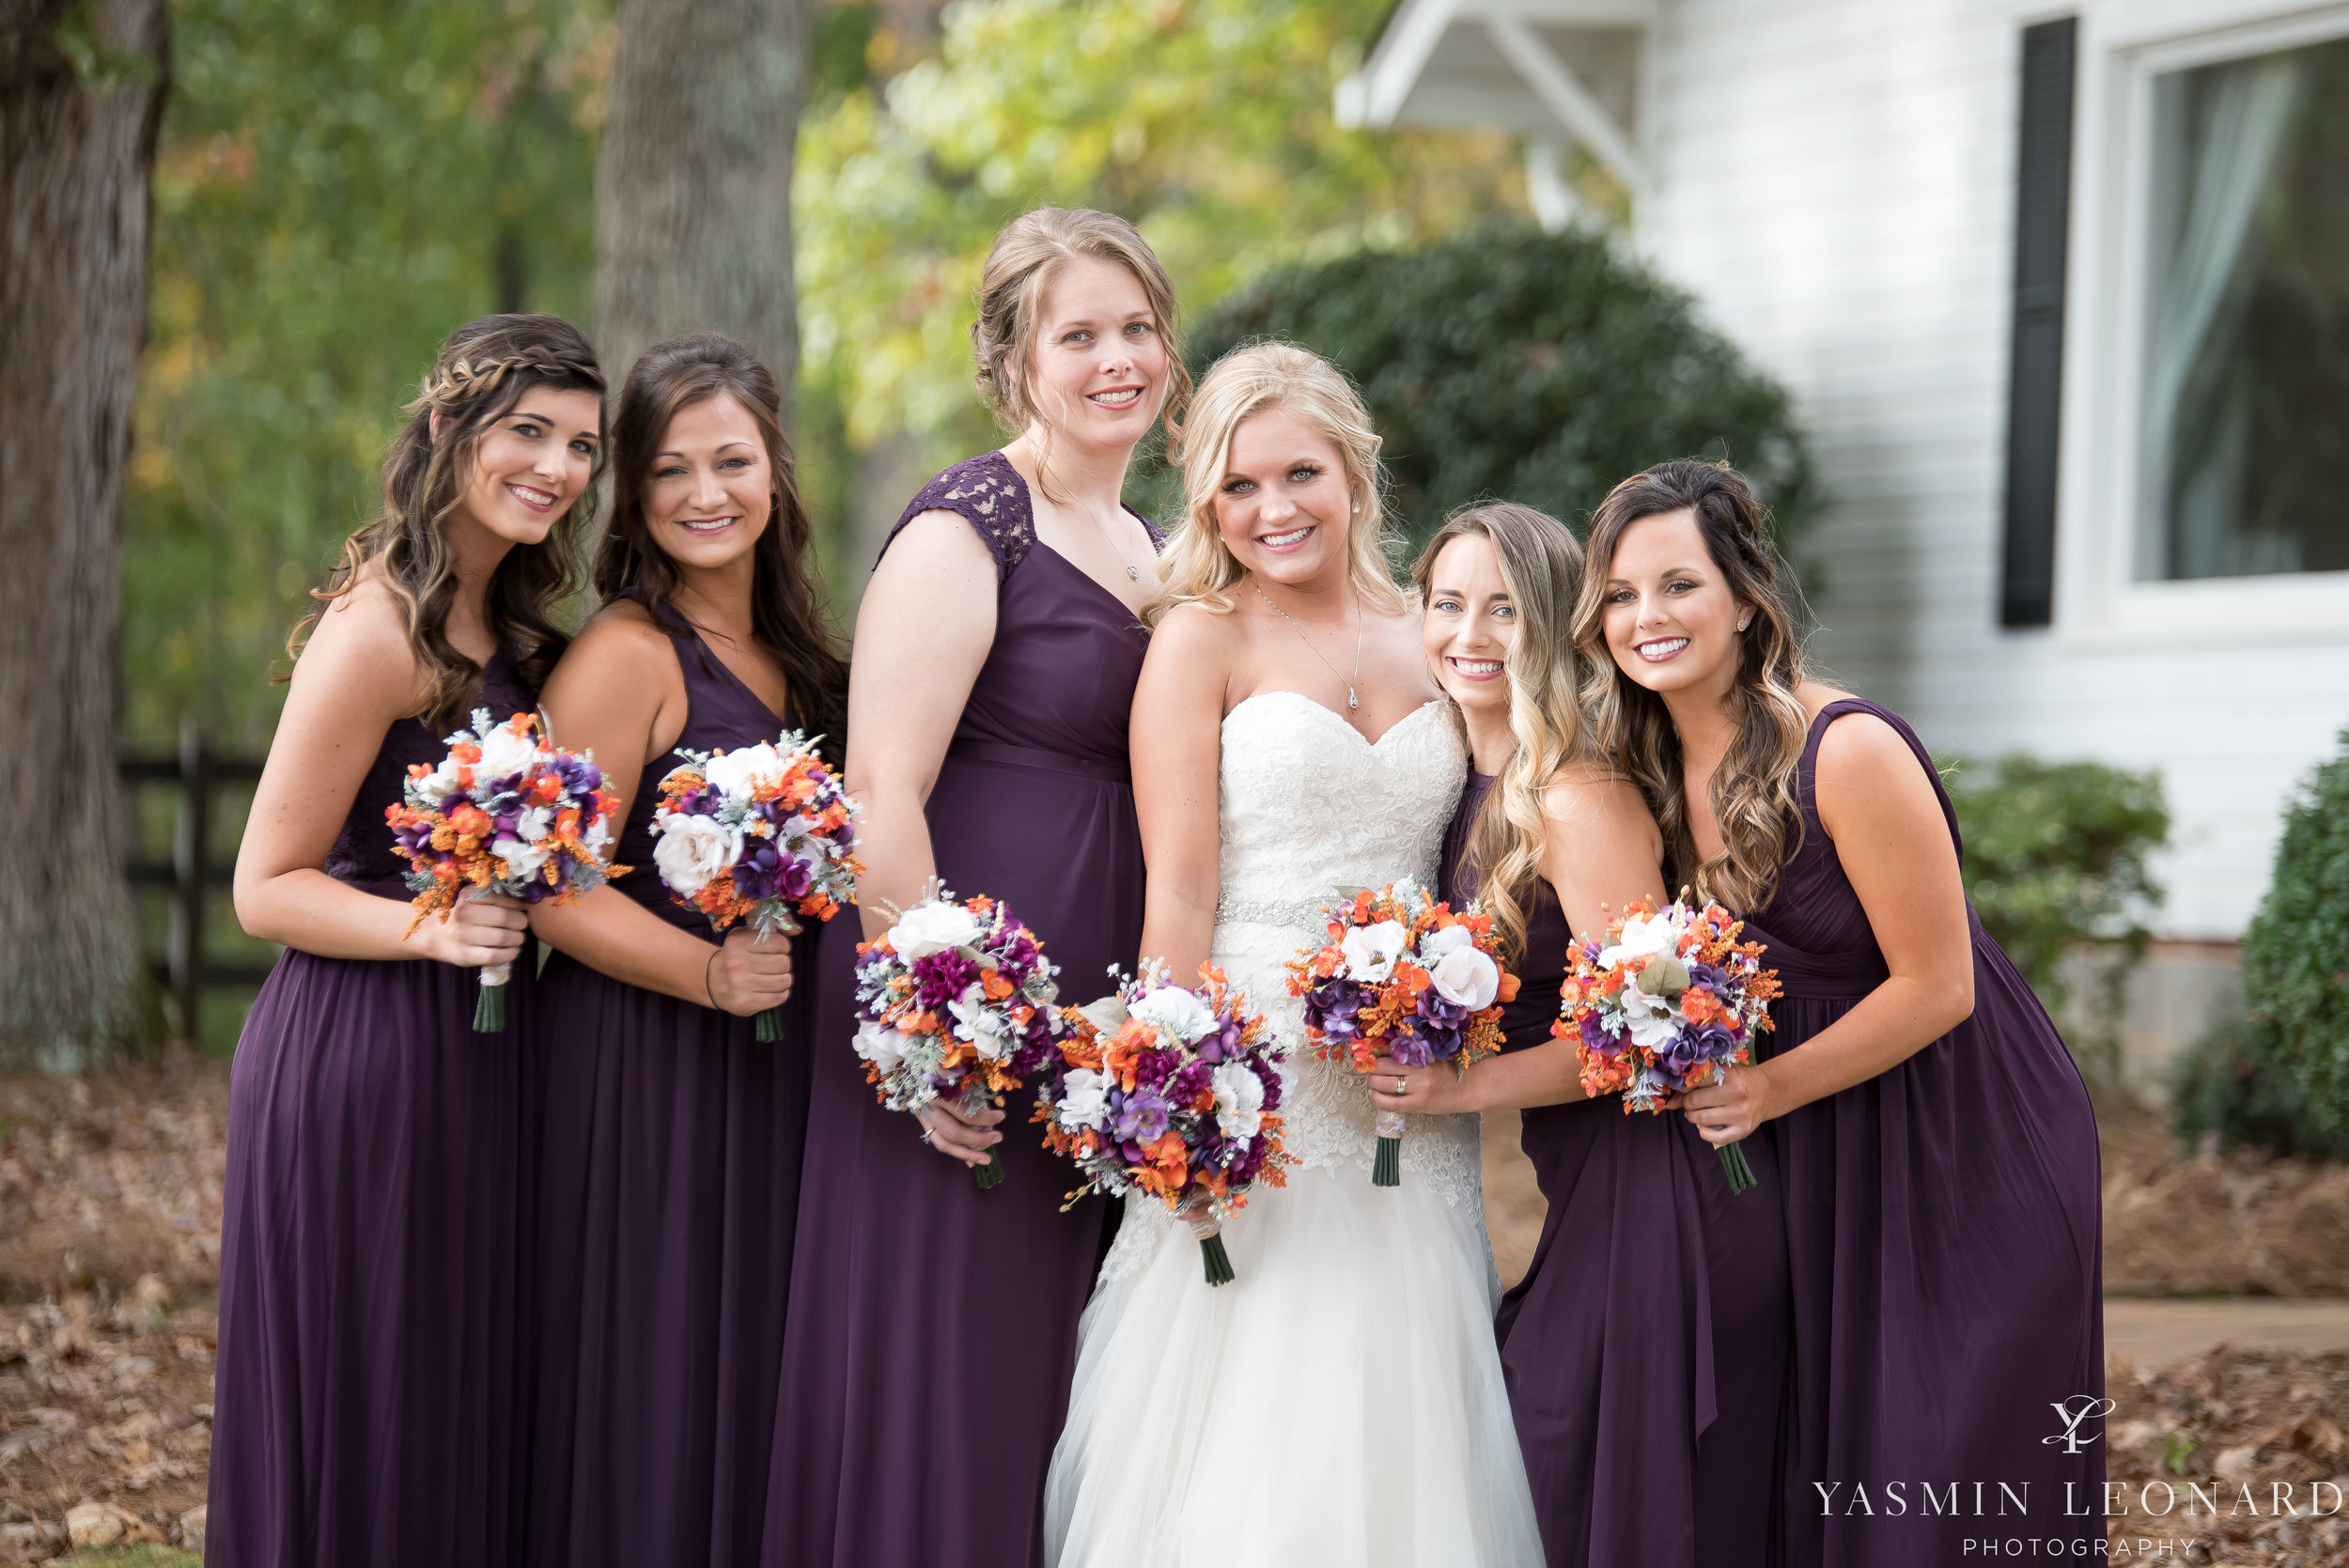 NC Wedding Photographer - Yasmin Leonard Photography - Summerfield Farms - High Point Wedding Photographer - Labri at Linwood - Barns in North Carolina - NC Barn Wedding-17.jpg